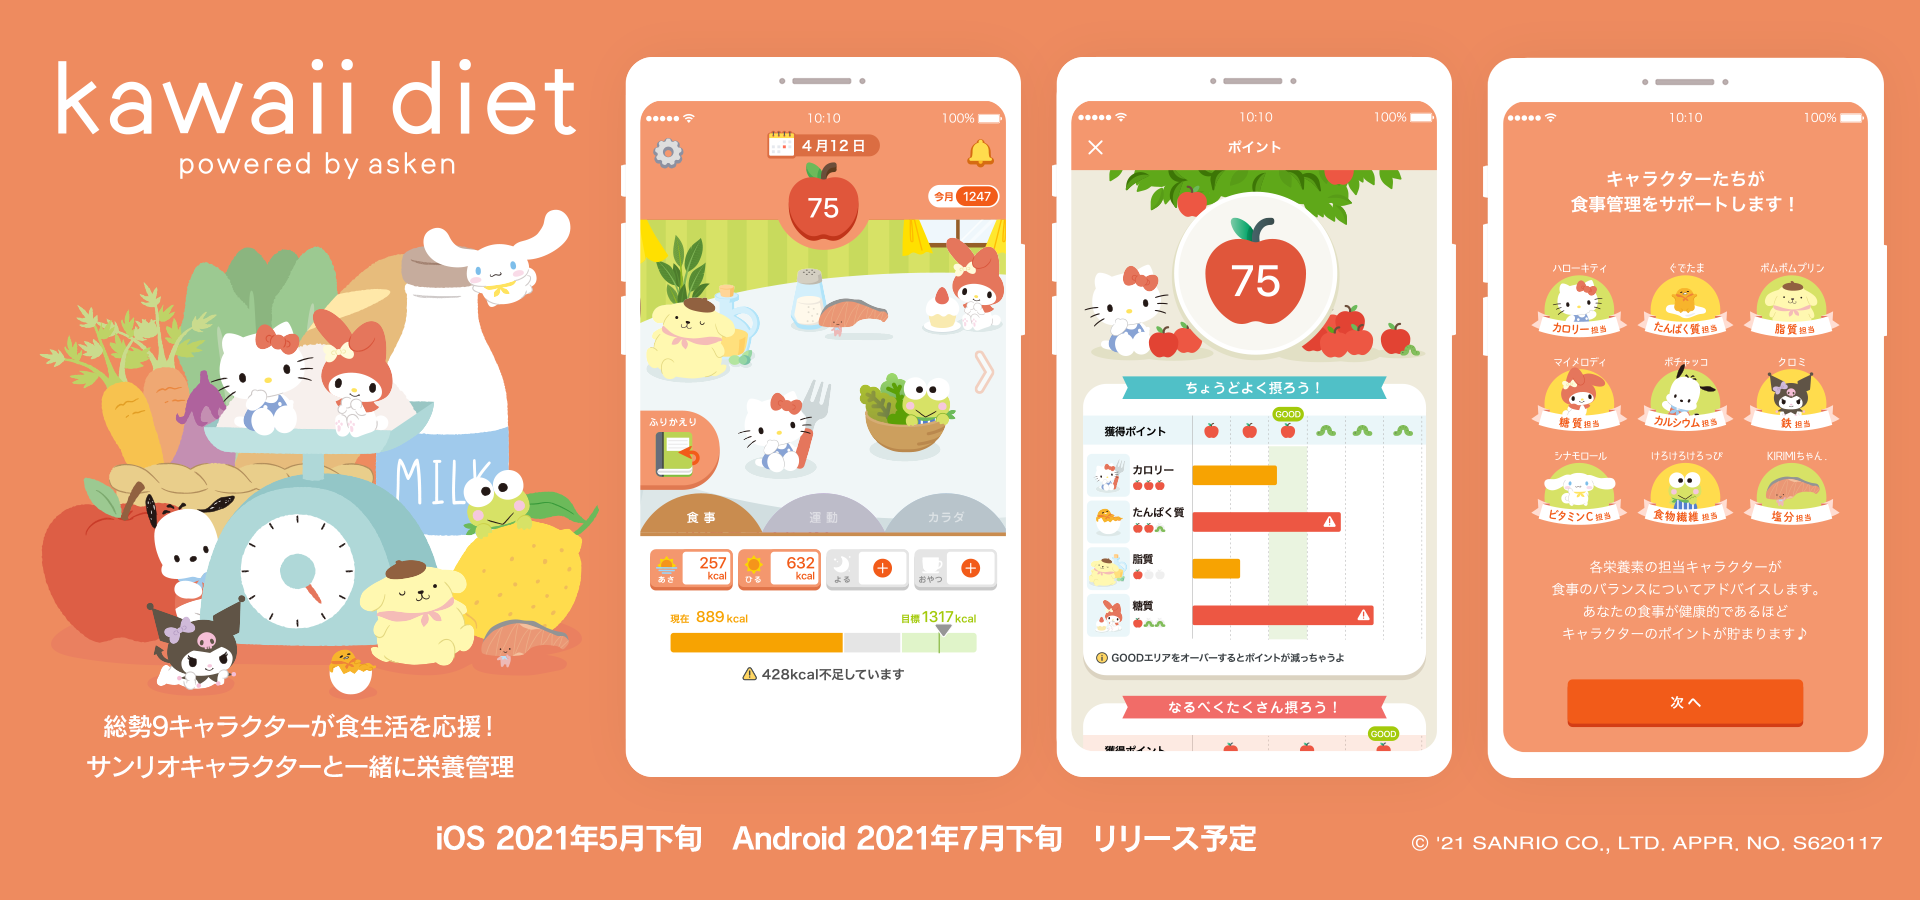 Ai食事管理アプリ あすけん とサンリオのキャラクターがコラボ Kawaii Diet を新たに5月下旬にリリース 株式会社askenのプレスリリース